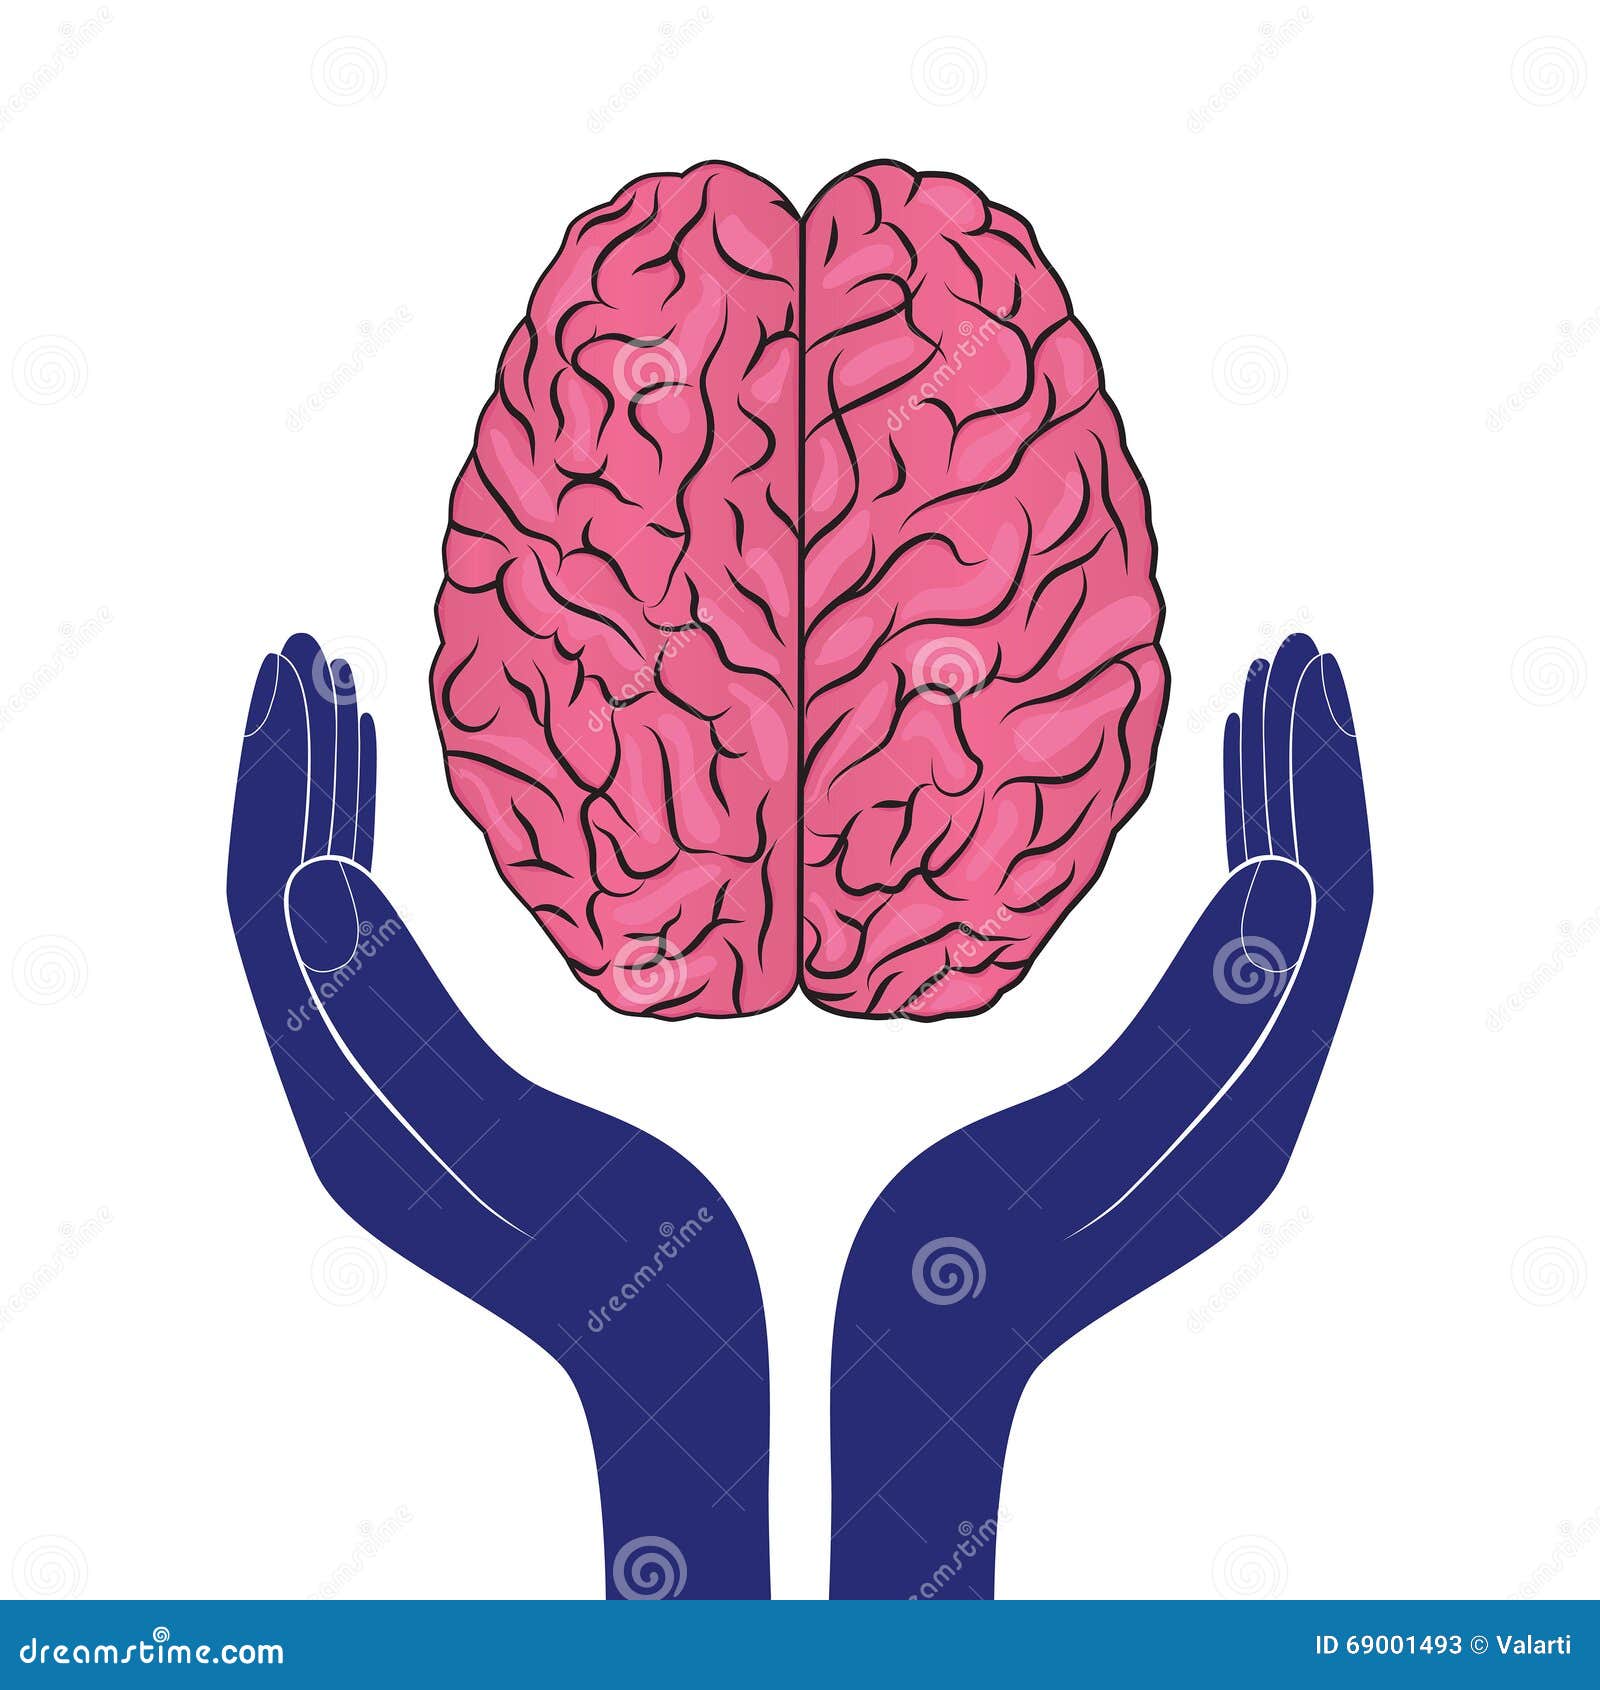 Anatomy Clipart-mental health hand holds a brain icon